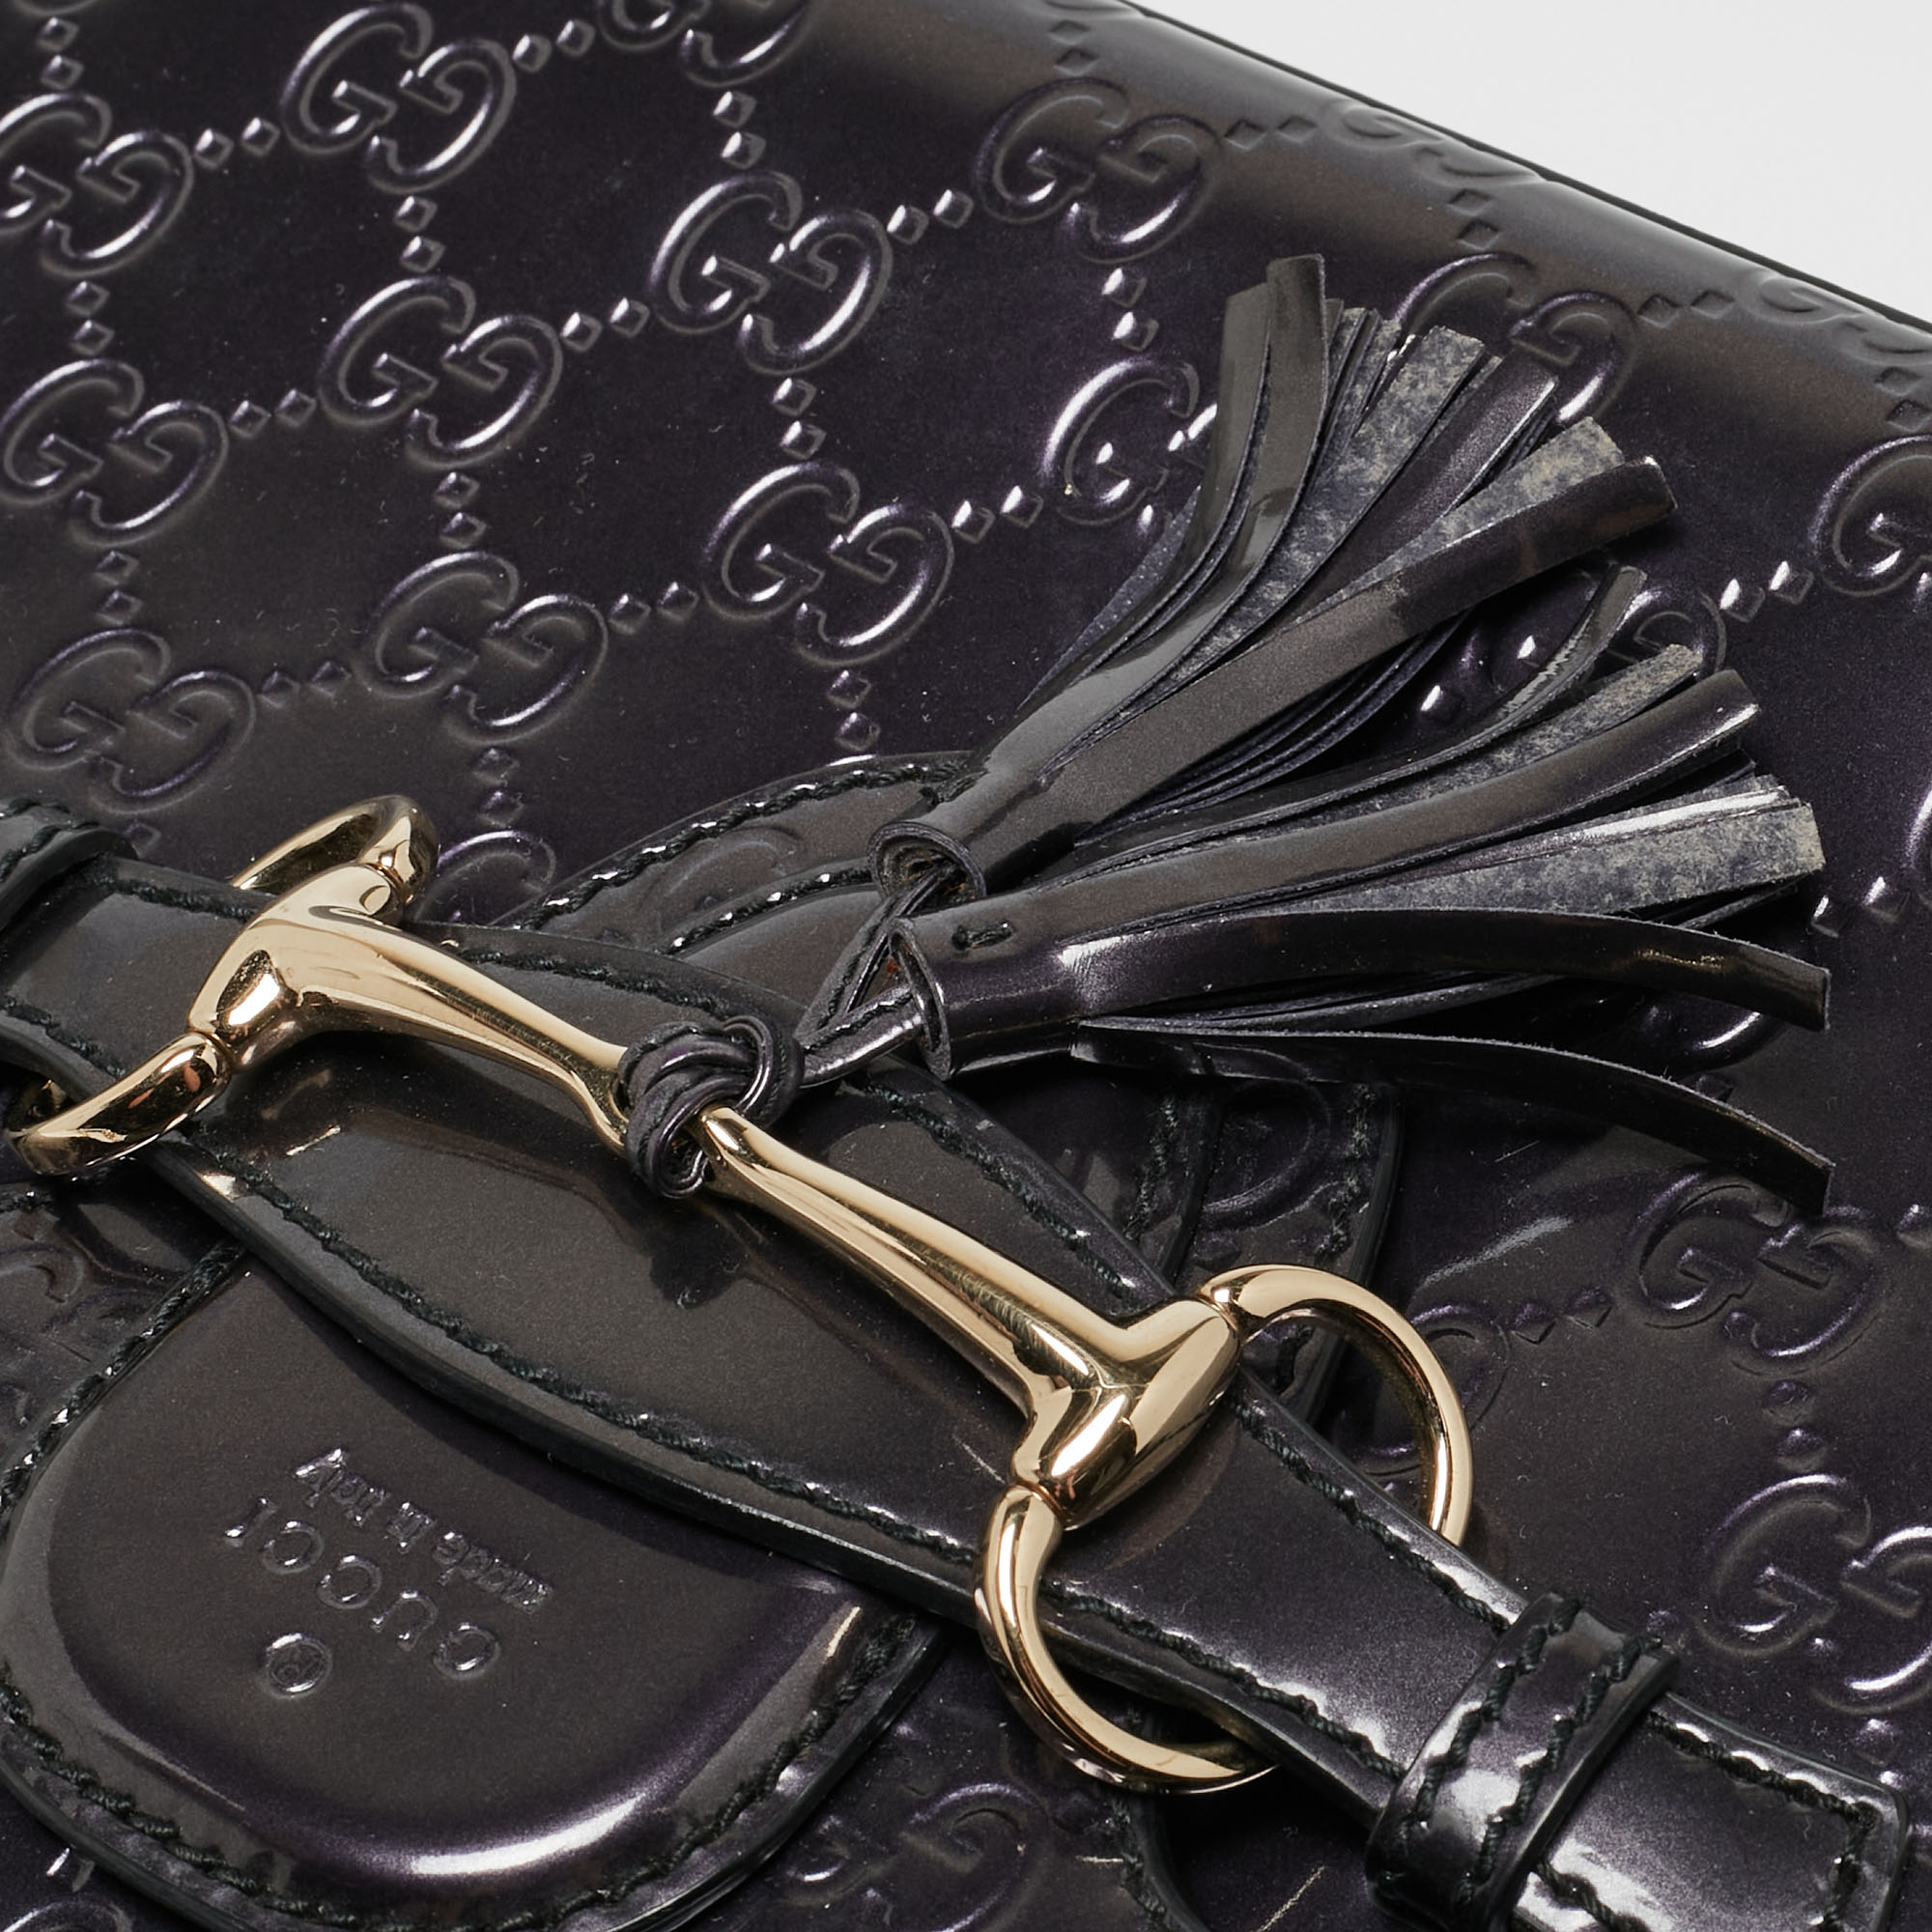 Gucci Purple Guccissima Patent Leather Medium Emily Chain Shoulder Bag